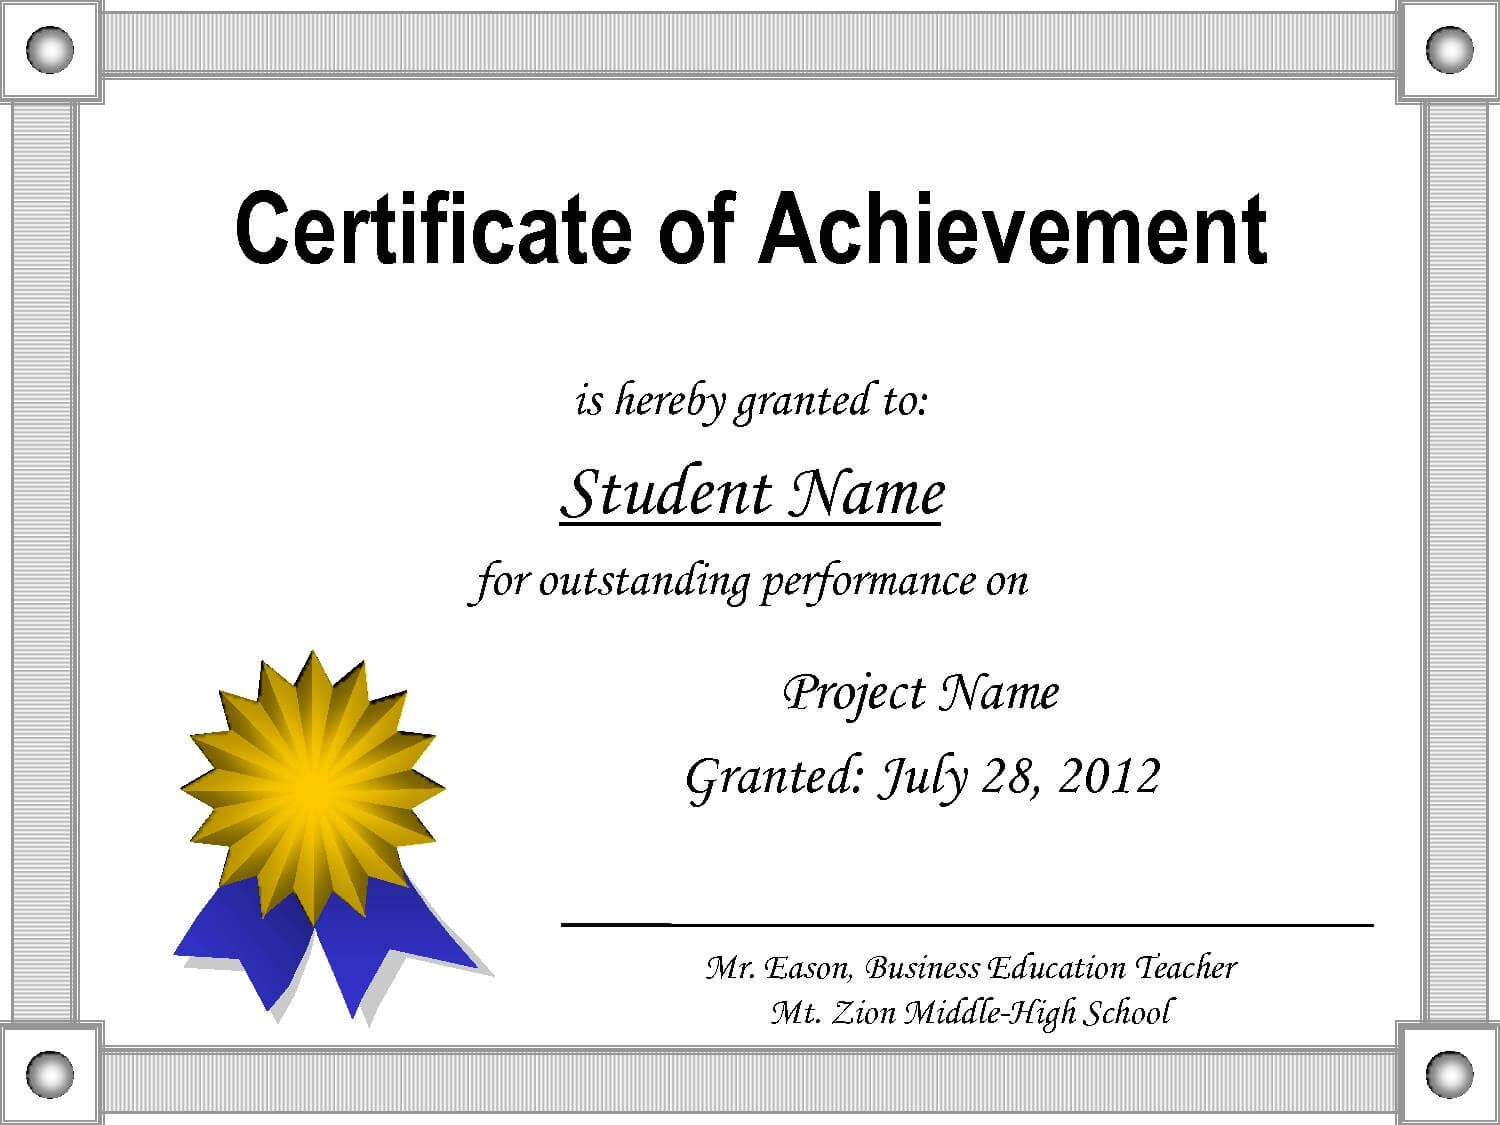 Certificates: Amazing Certificate Of Achievement Template With Superlative Certificate Template